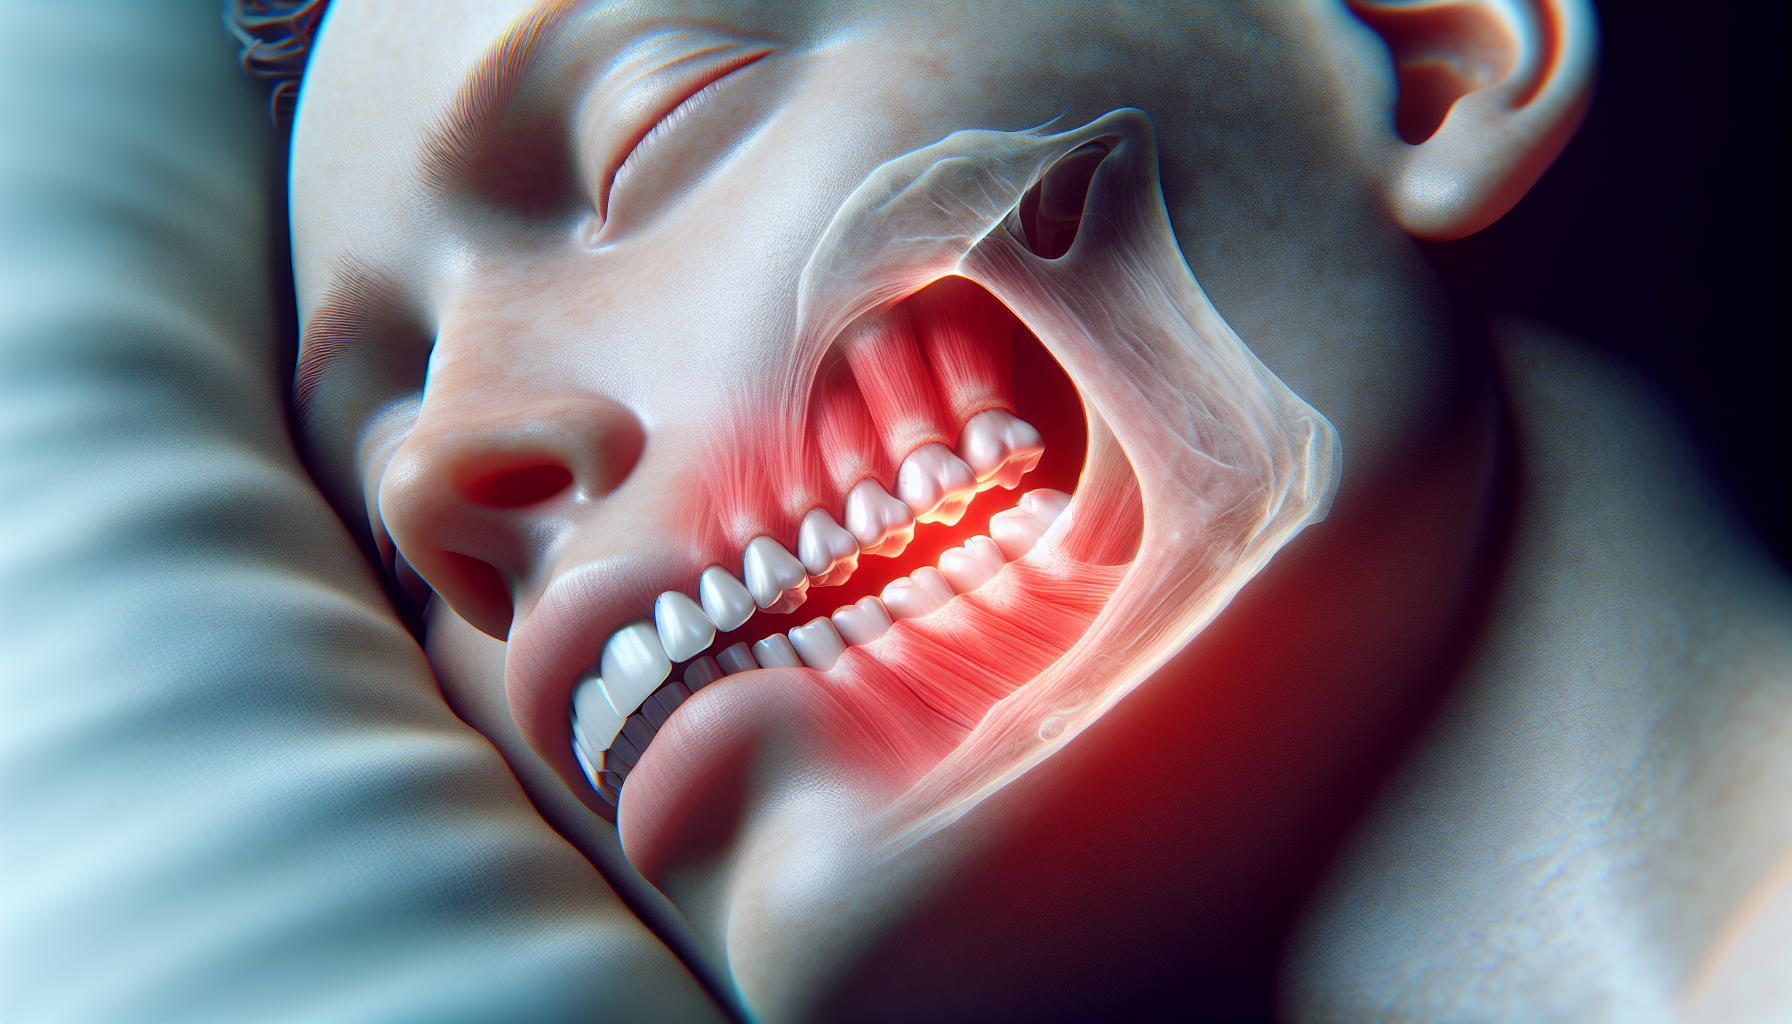 Illustration of teeth grinding during sleep